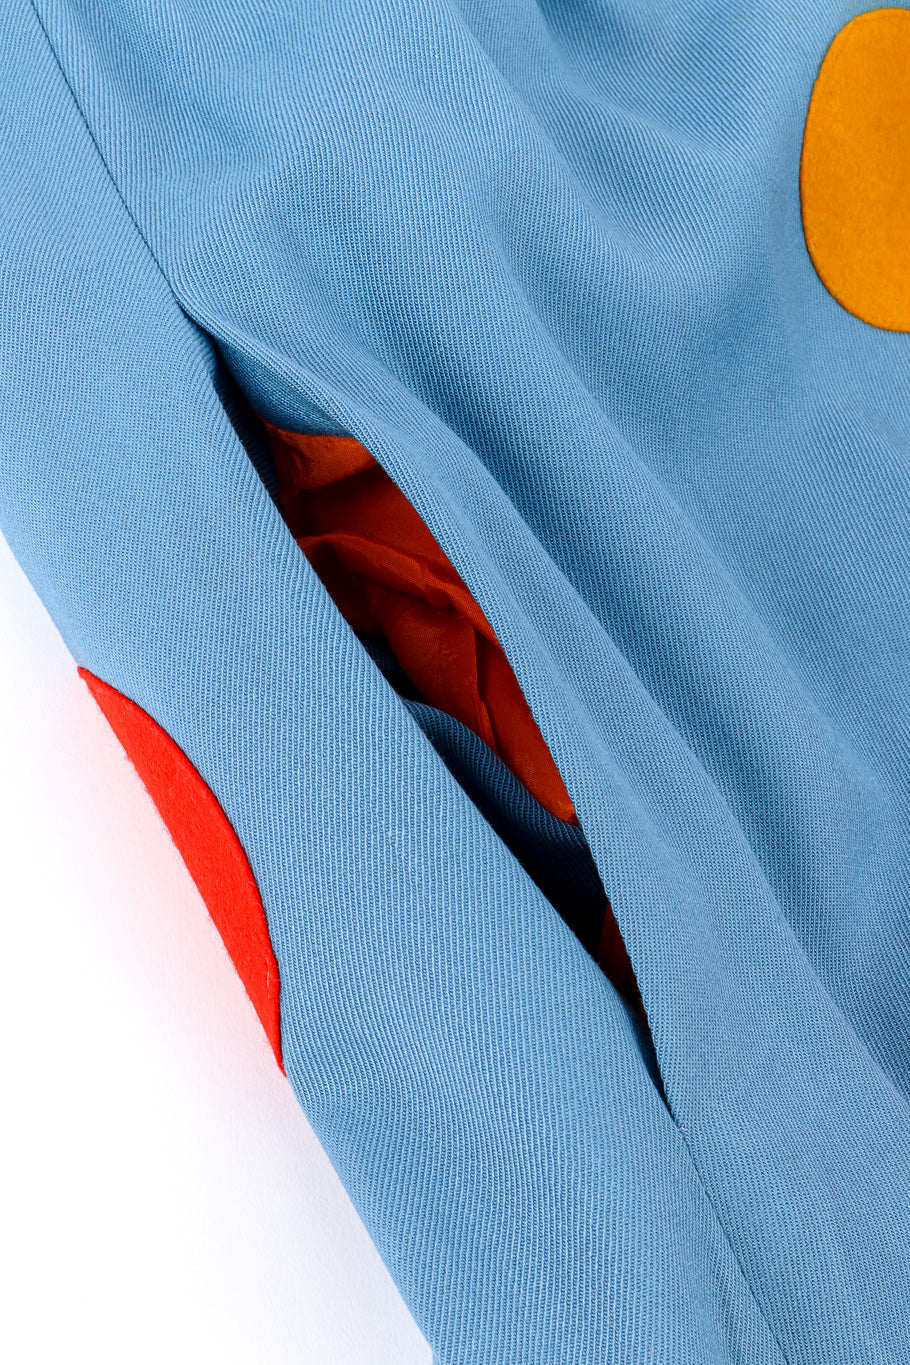 Vintage Malcolm Starr Geometric Top and Skirt Set pocket closeup @recessla